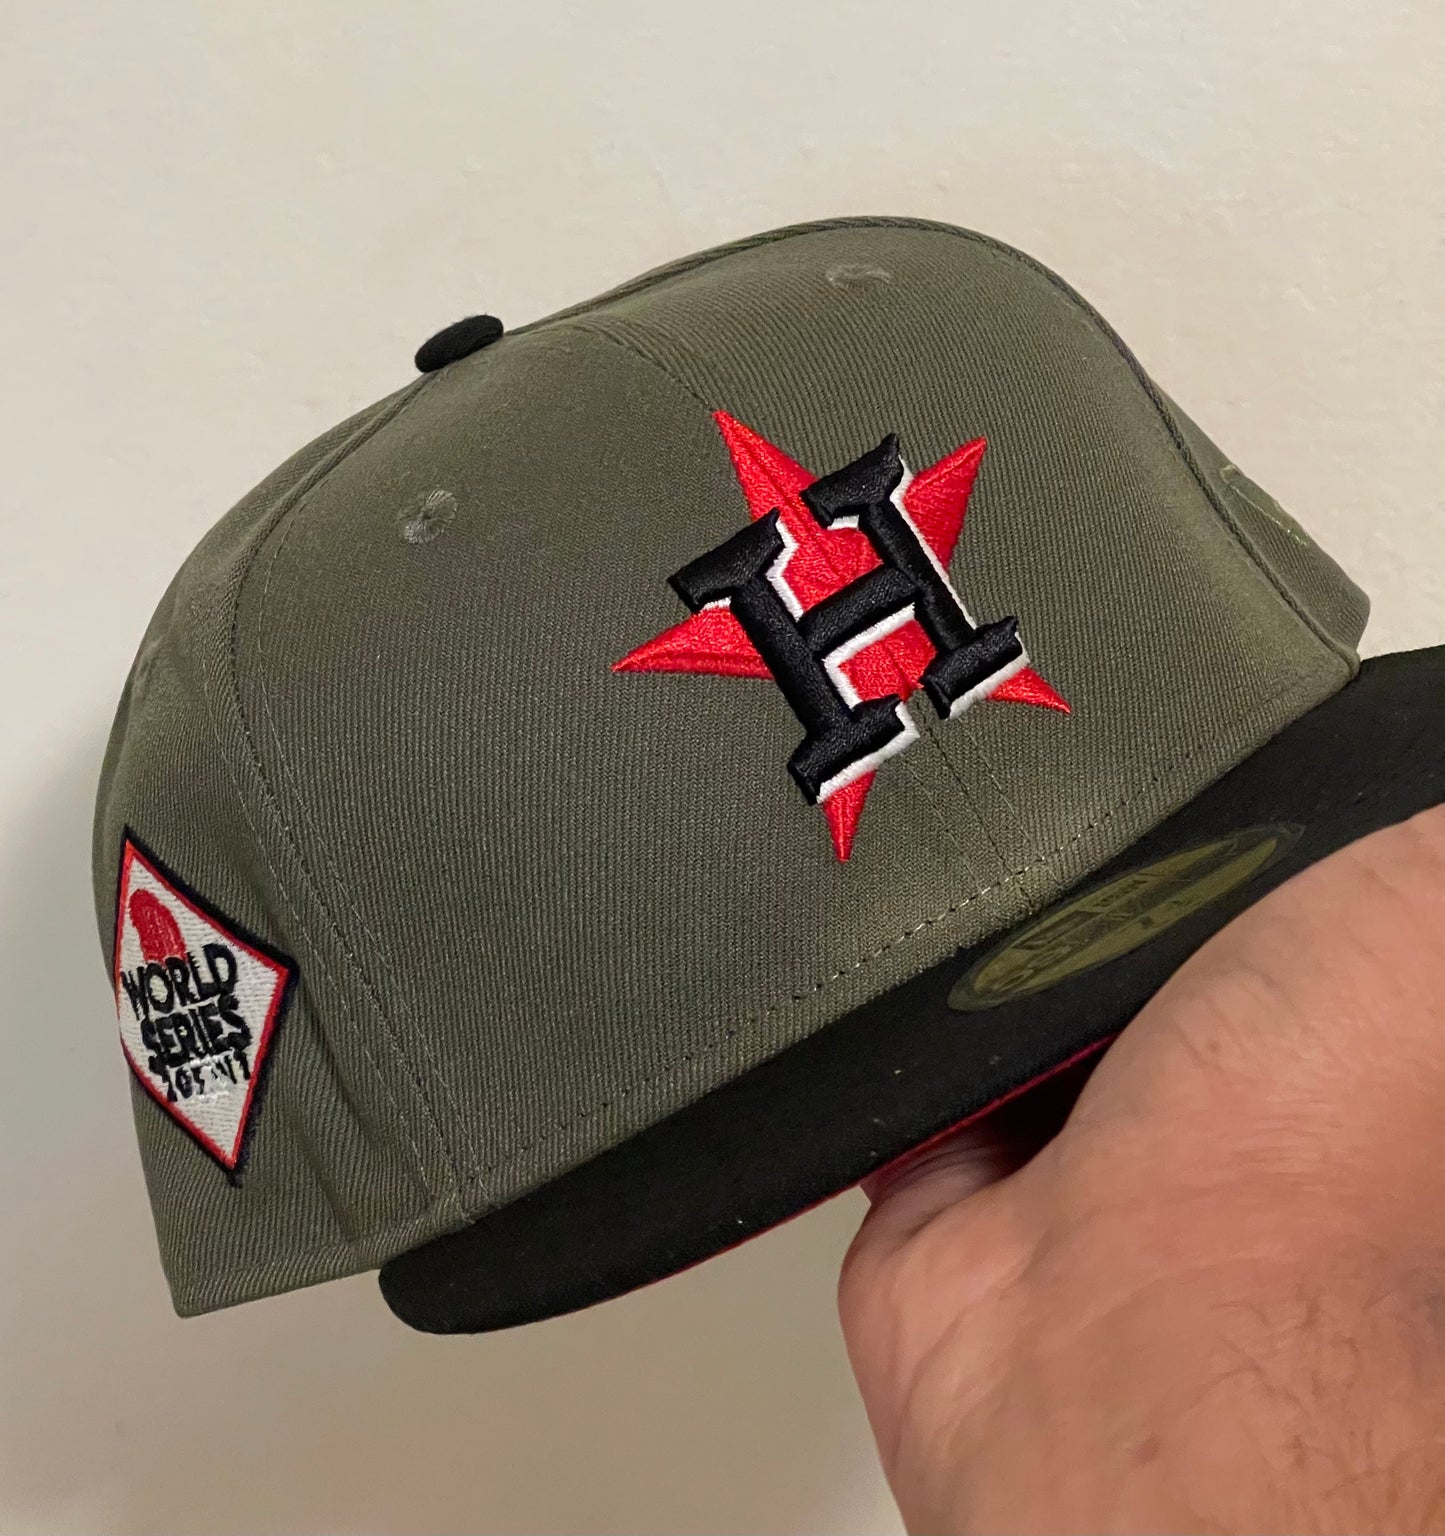 Houston Astros Travis Scott Inspired “Glow In The Dark” 2017 World Series Patch Fitted Hat (Olive/Black/Red/GITD) New Era 5950